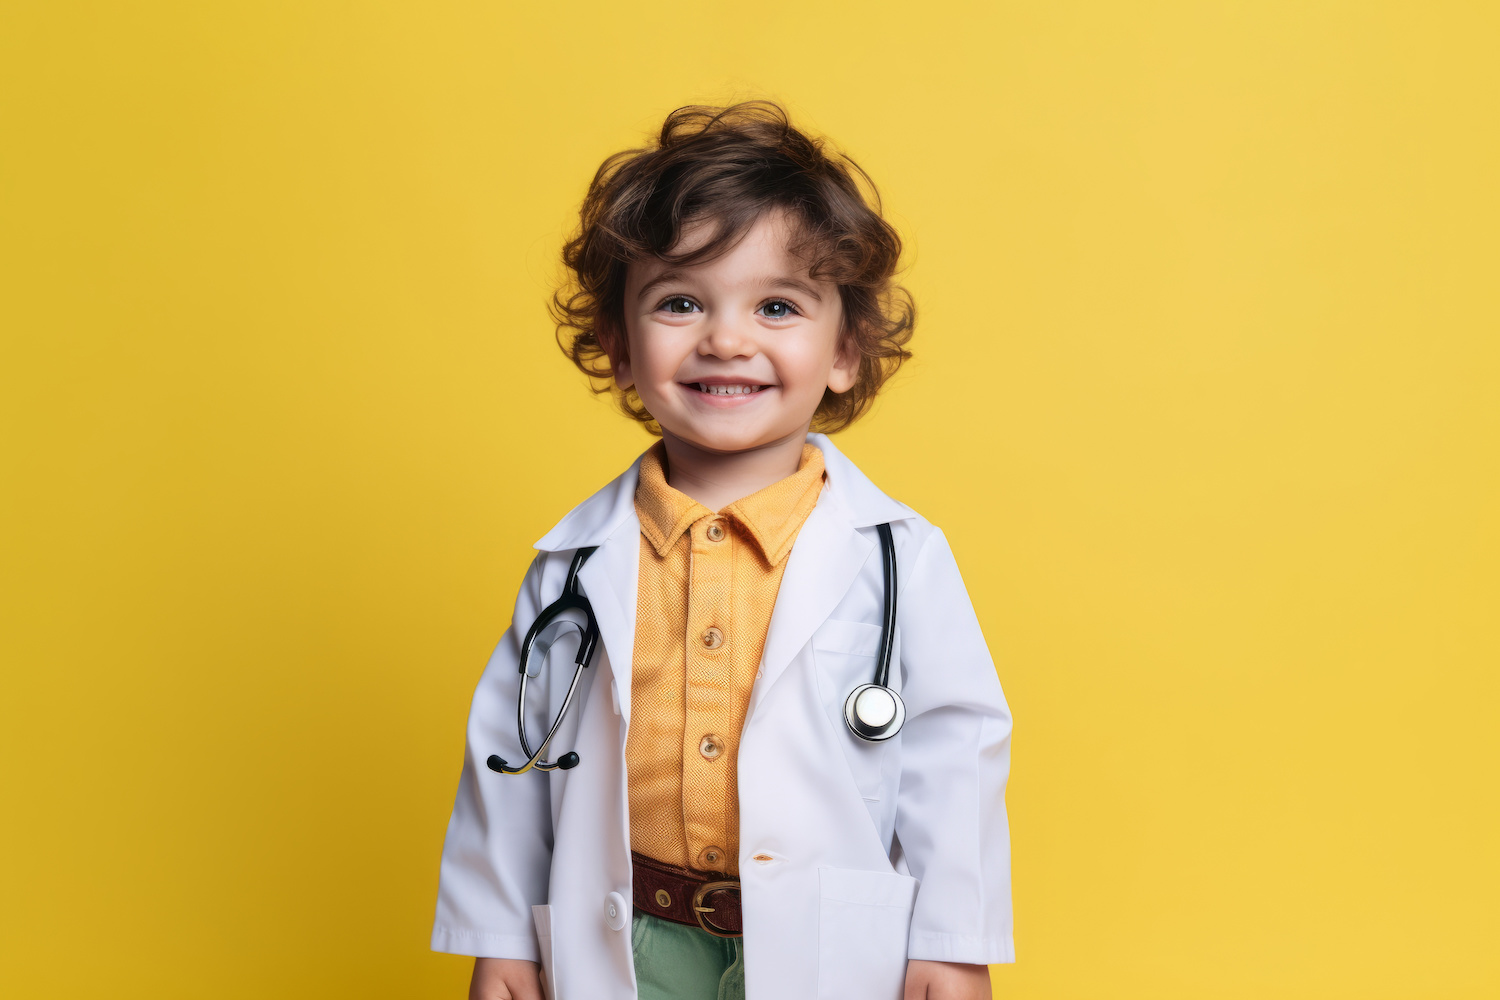 Pediatric Urgent Care vs. the Emergency Room: What’s the Difference? - Excelente Atención Pediátrica de Urgencia en Texas - Clínicas Little Spurs de Atención Pediátrica de Urgencia